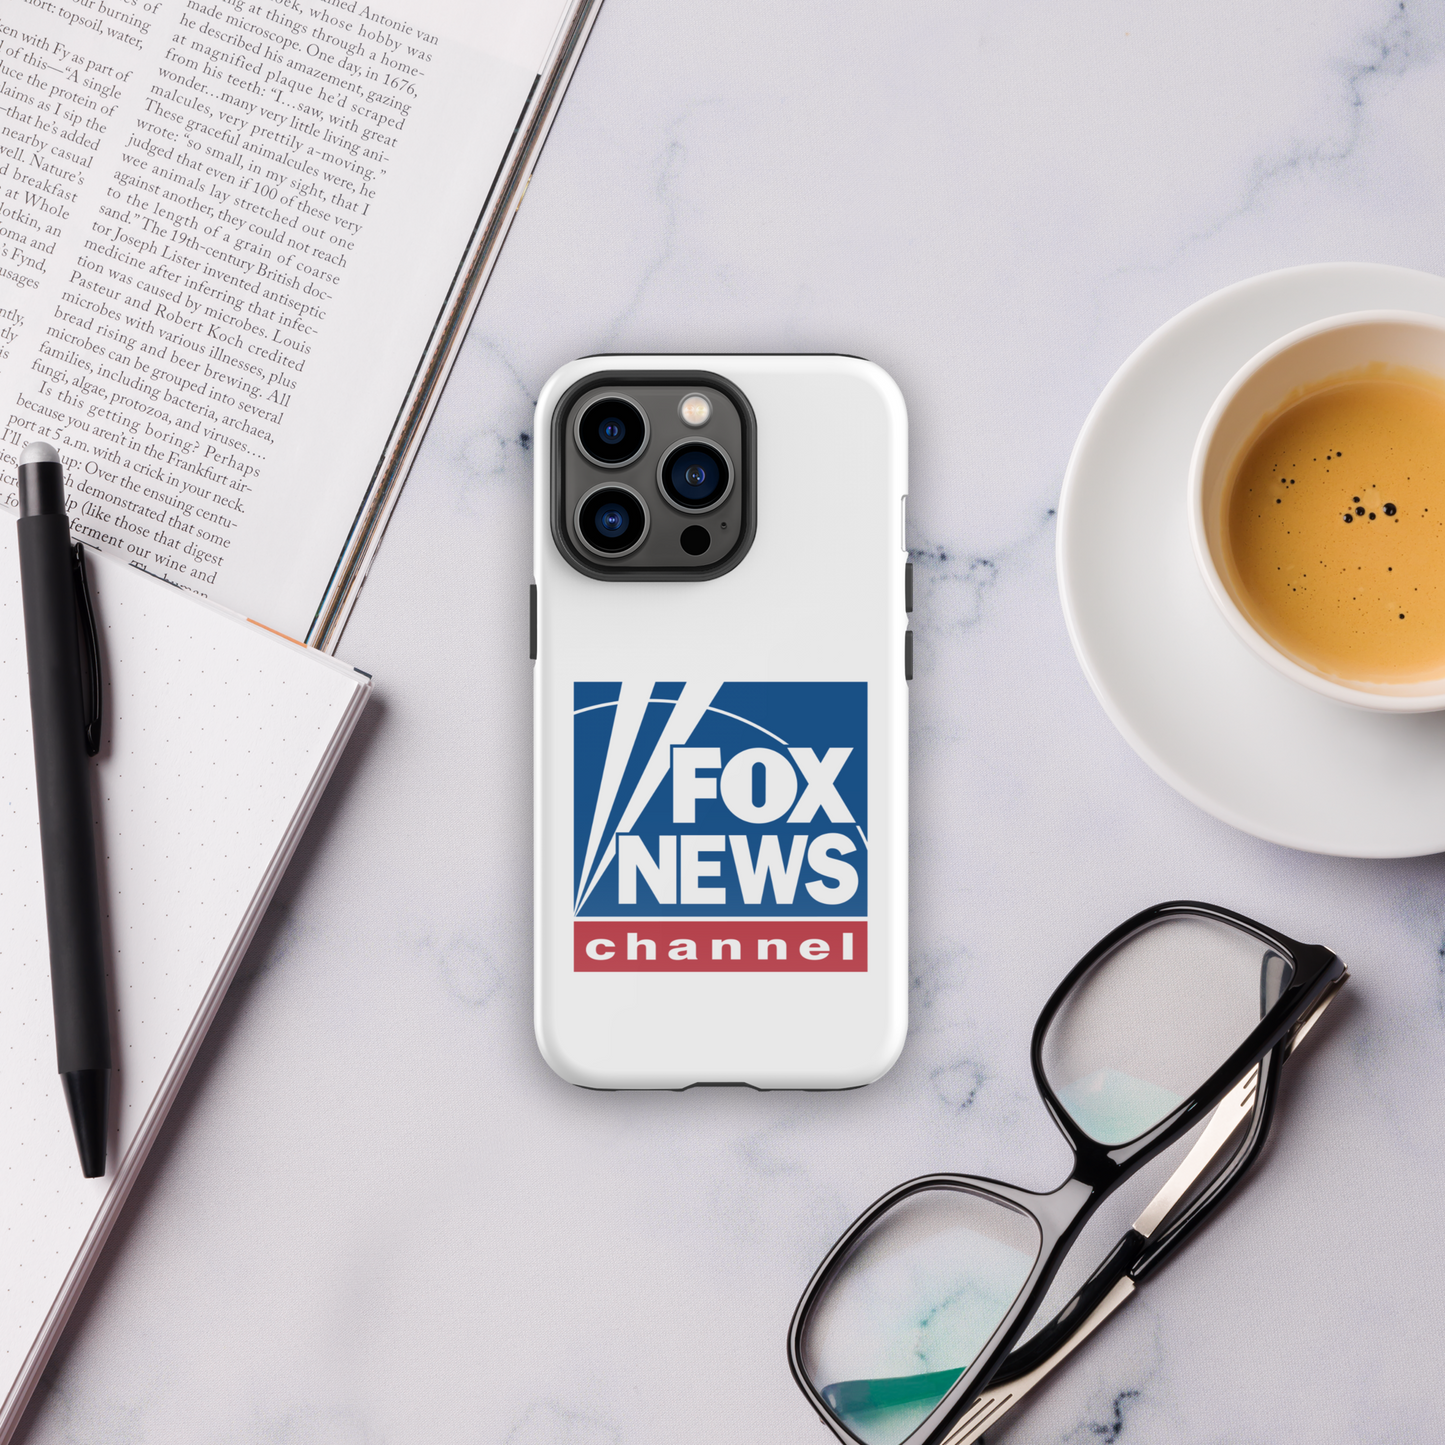 Fox News Logo White Tough Phone Case - iPhone